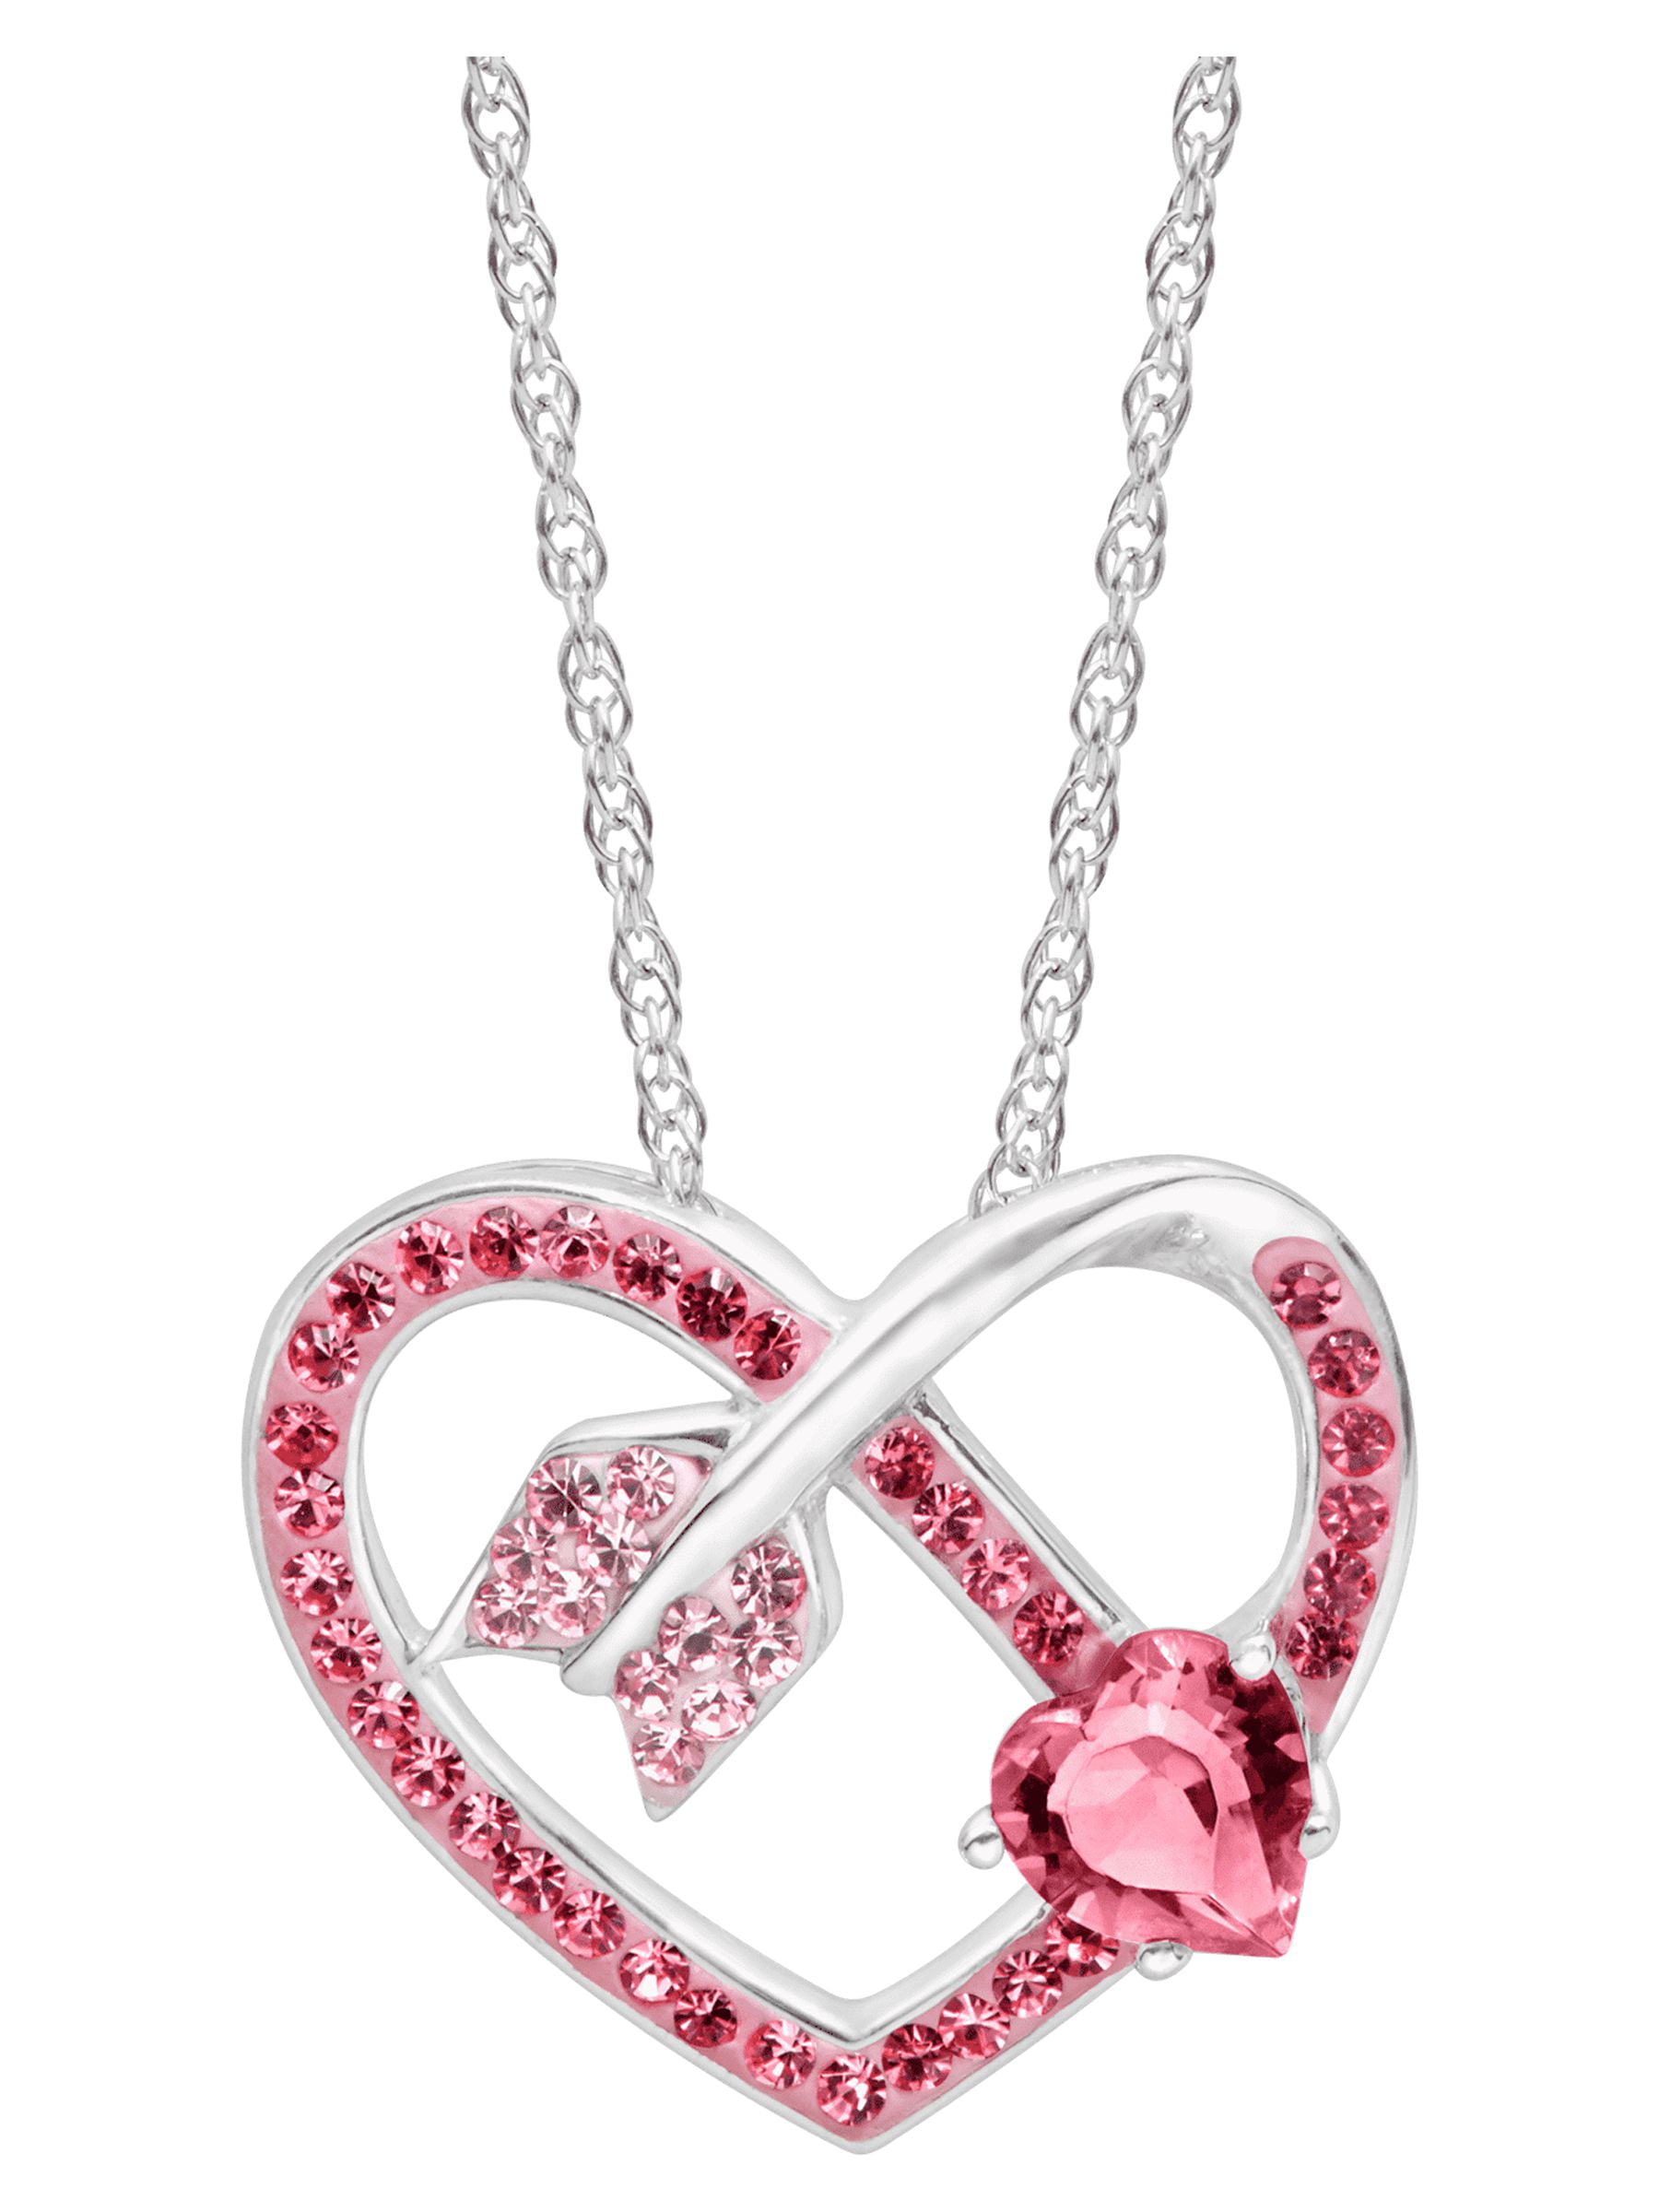 Pink Sapphire Full Heart Necklace | bespoke fine jewelry